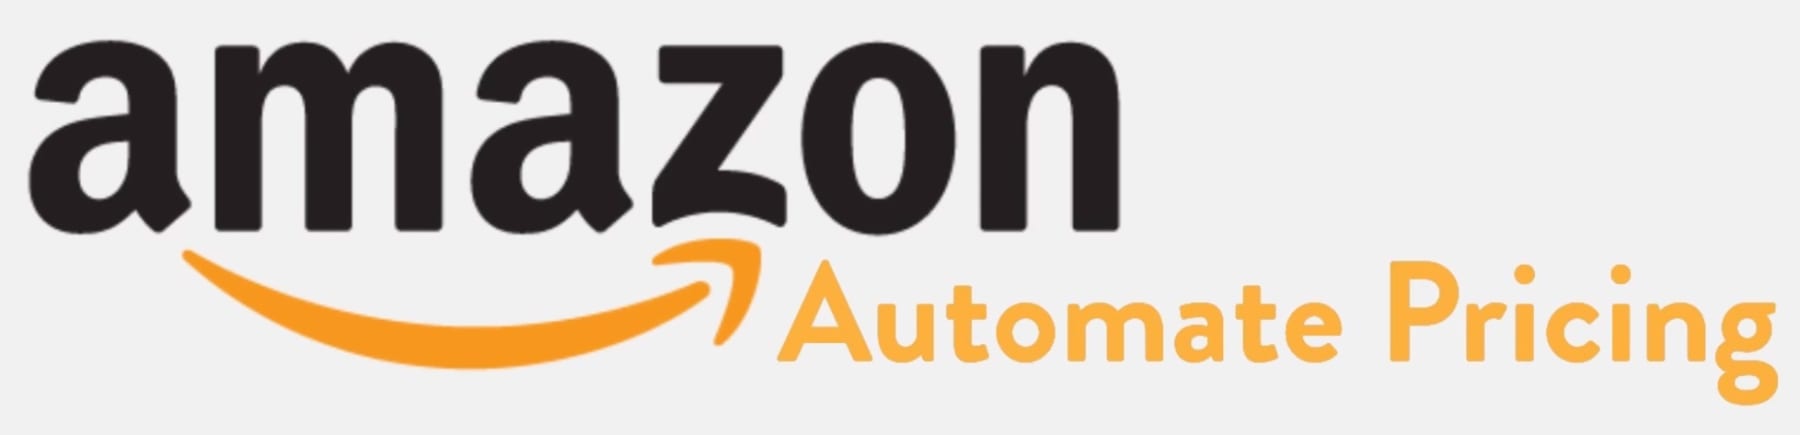 Amazon Automate Pricing logo